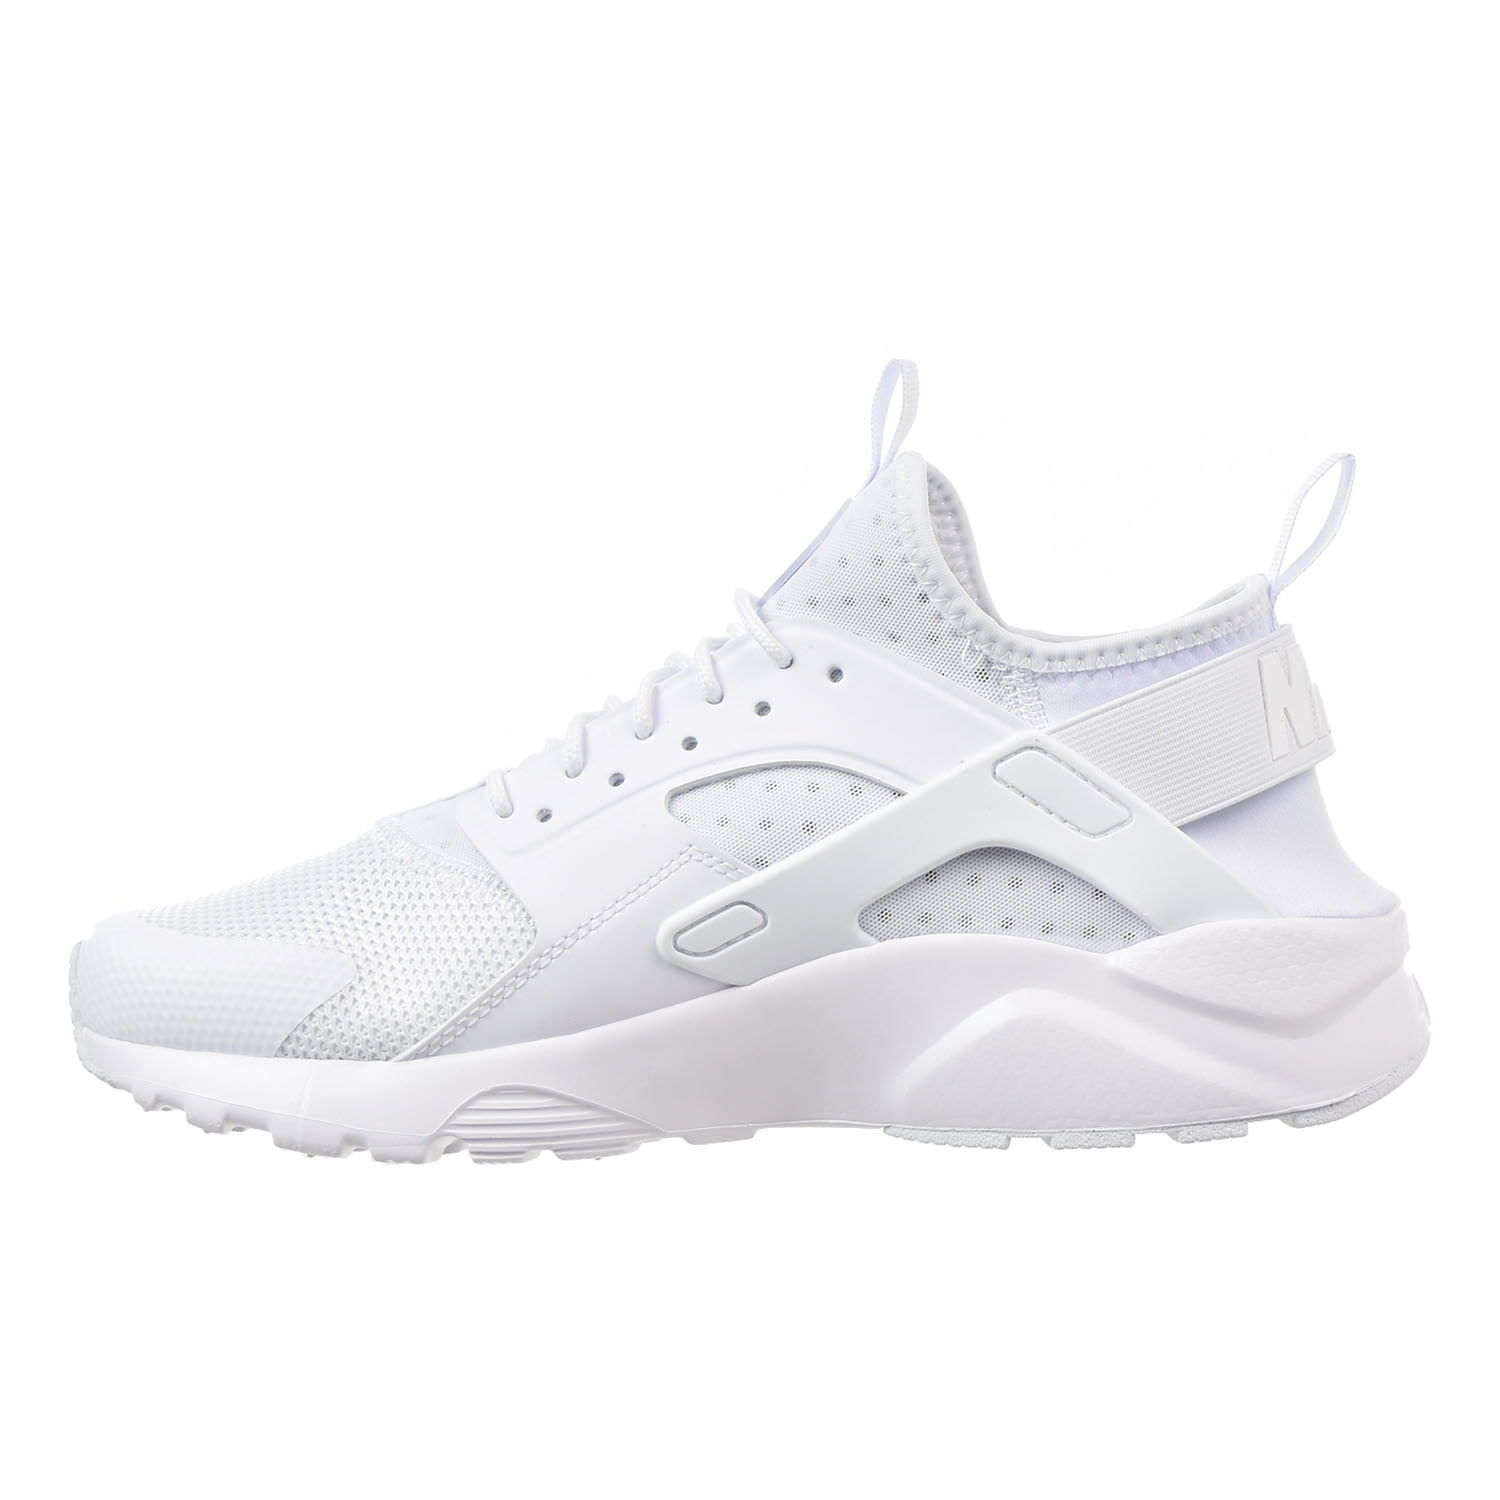 Nike Air Huarache Run Ultra Men's Shoes White/White/White 819685-101 -